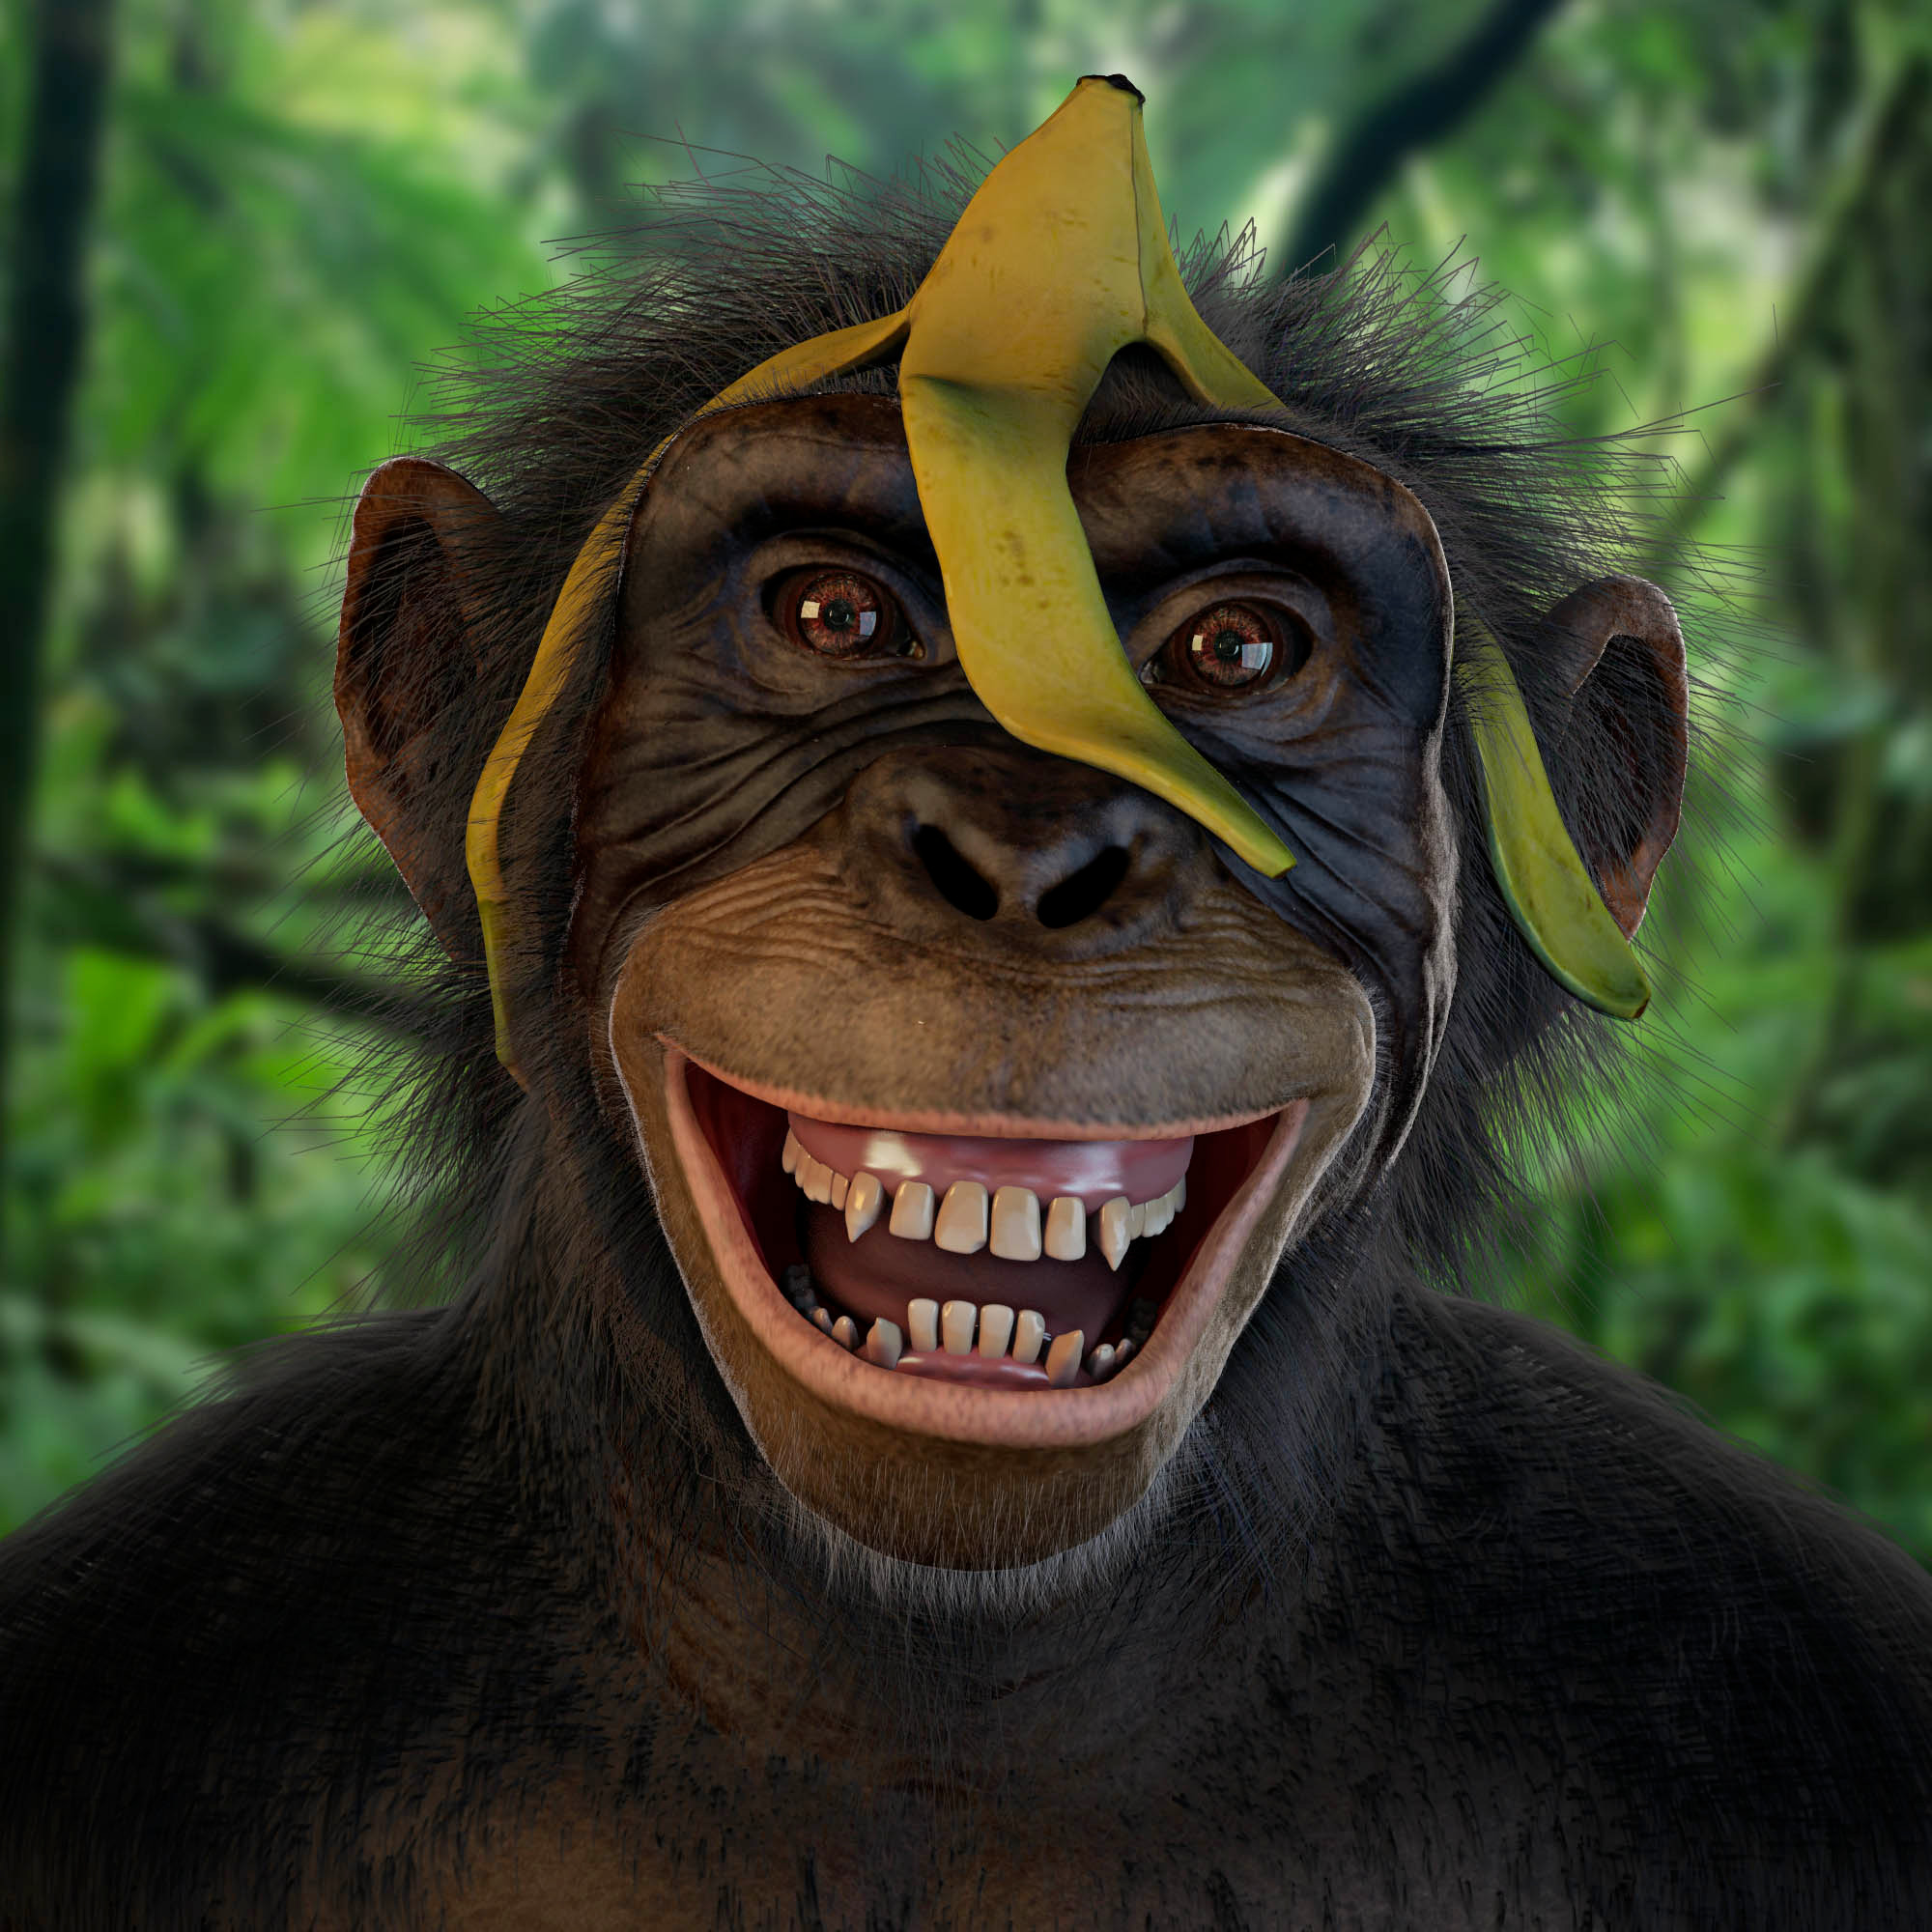 От улыбки обезьяна подавилася бананом. Обезьяна ржет. Обезьяна улыбается. Глупая обезьяна. Смешные обезьяны.